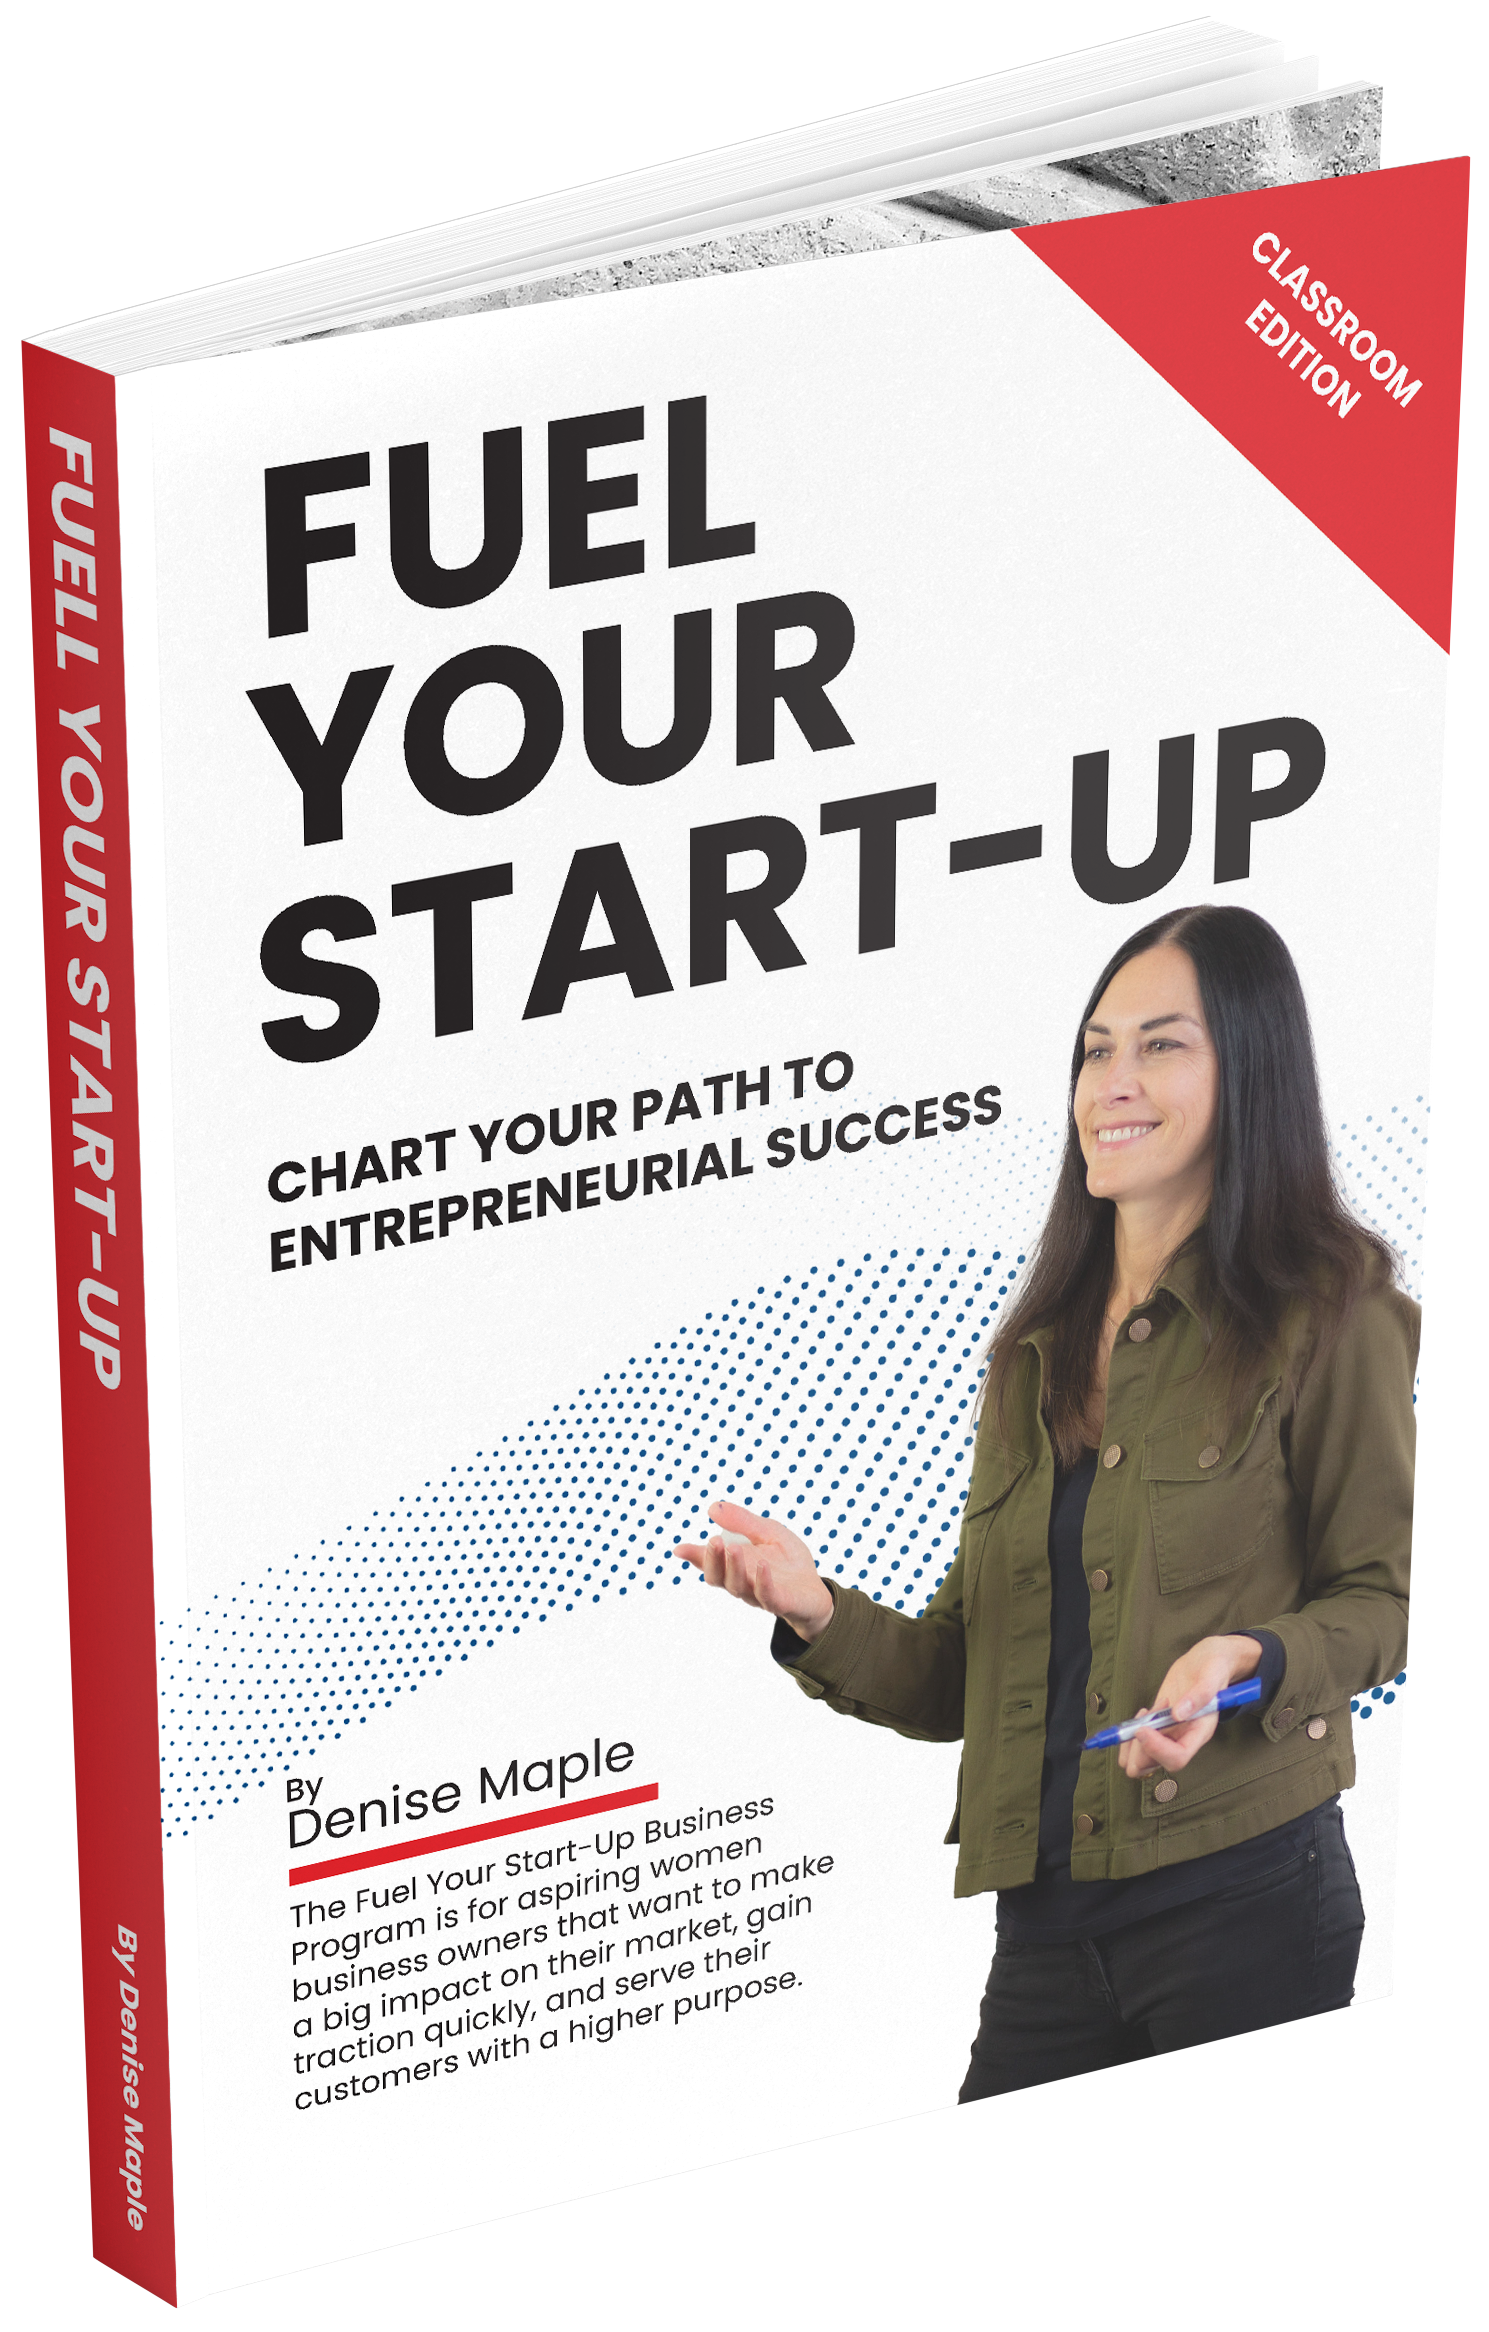 Fuel Your Start-up Business Program